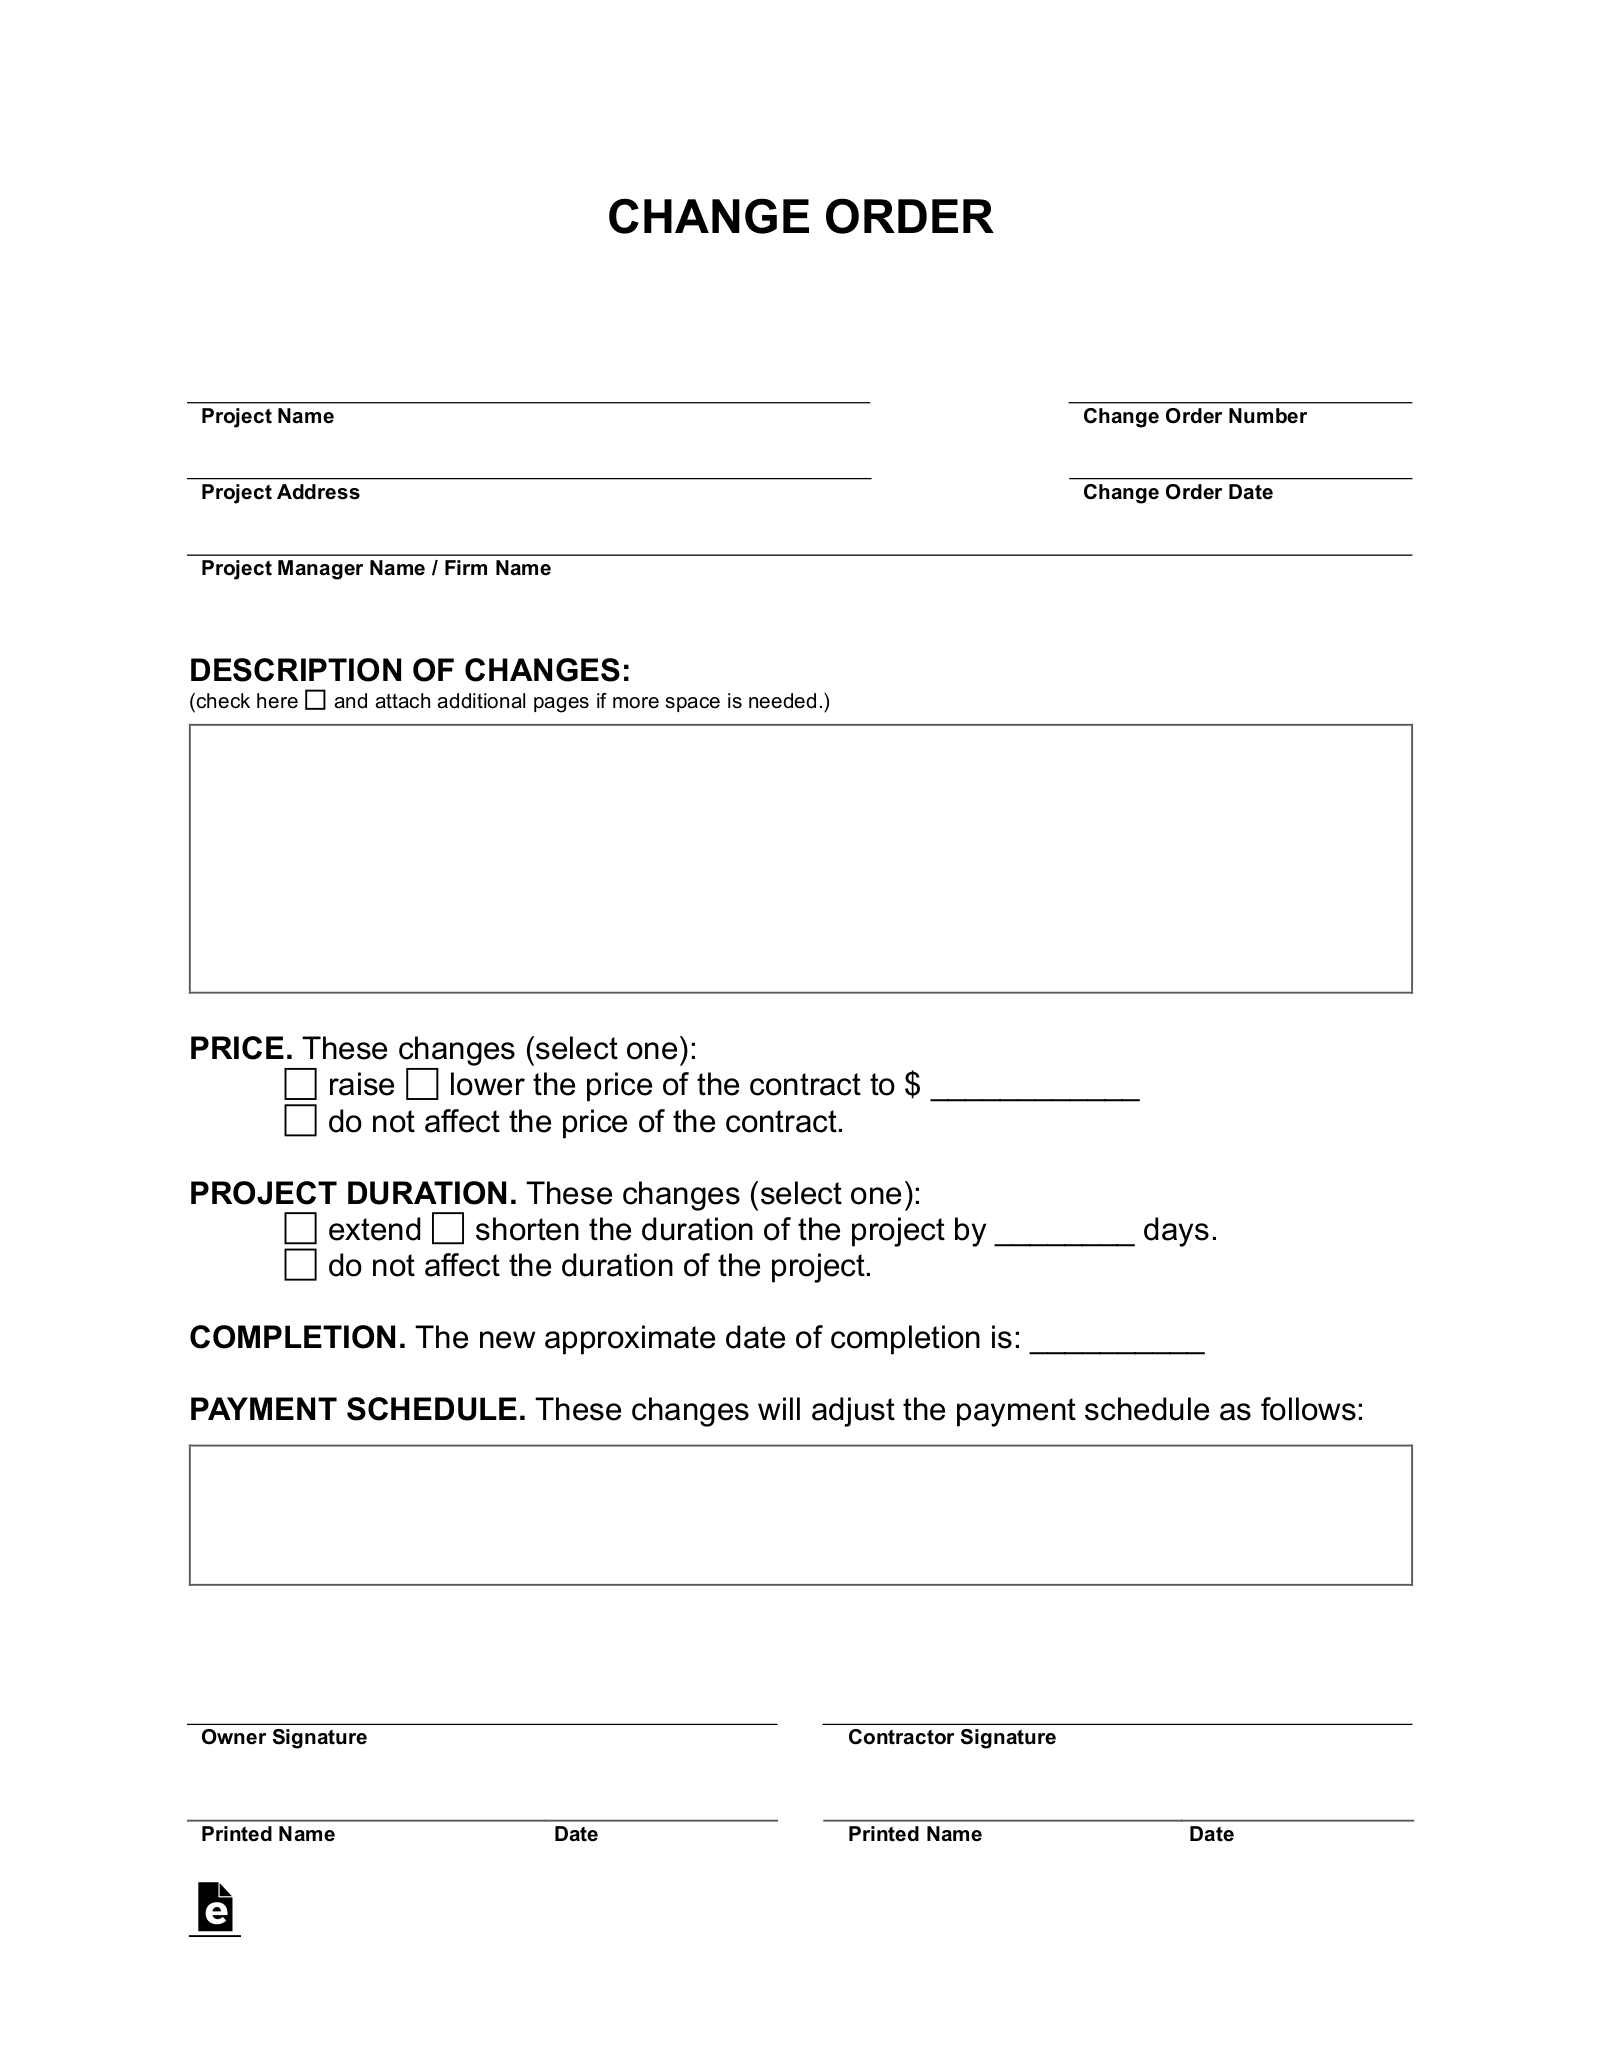 Change Order Form (Construction)